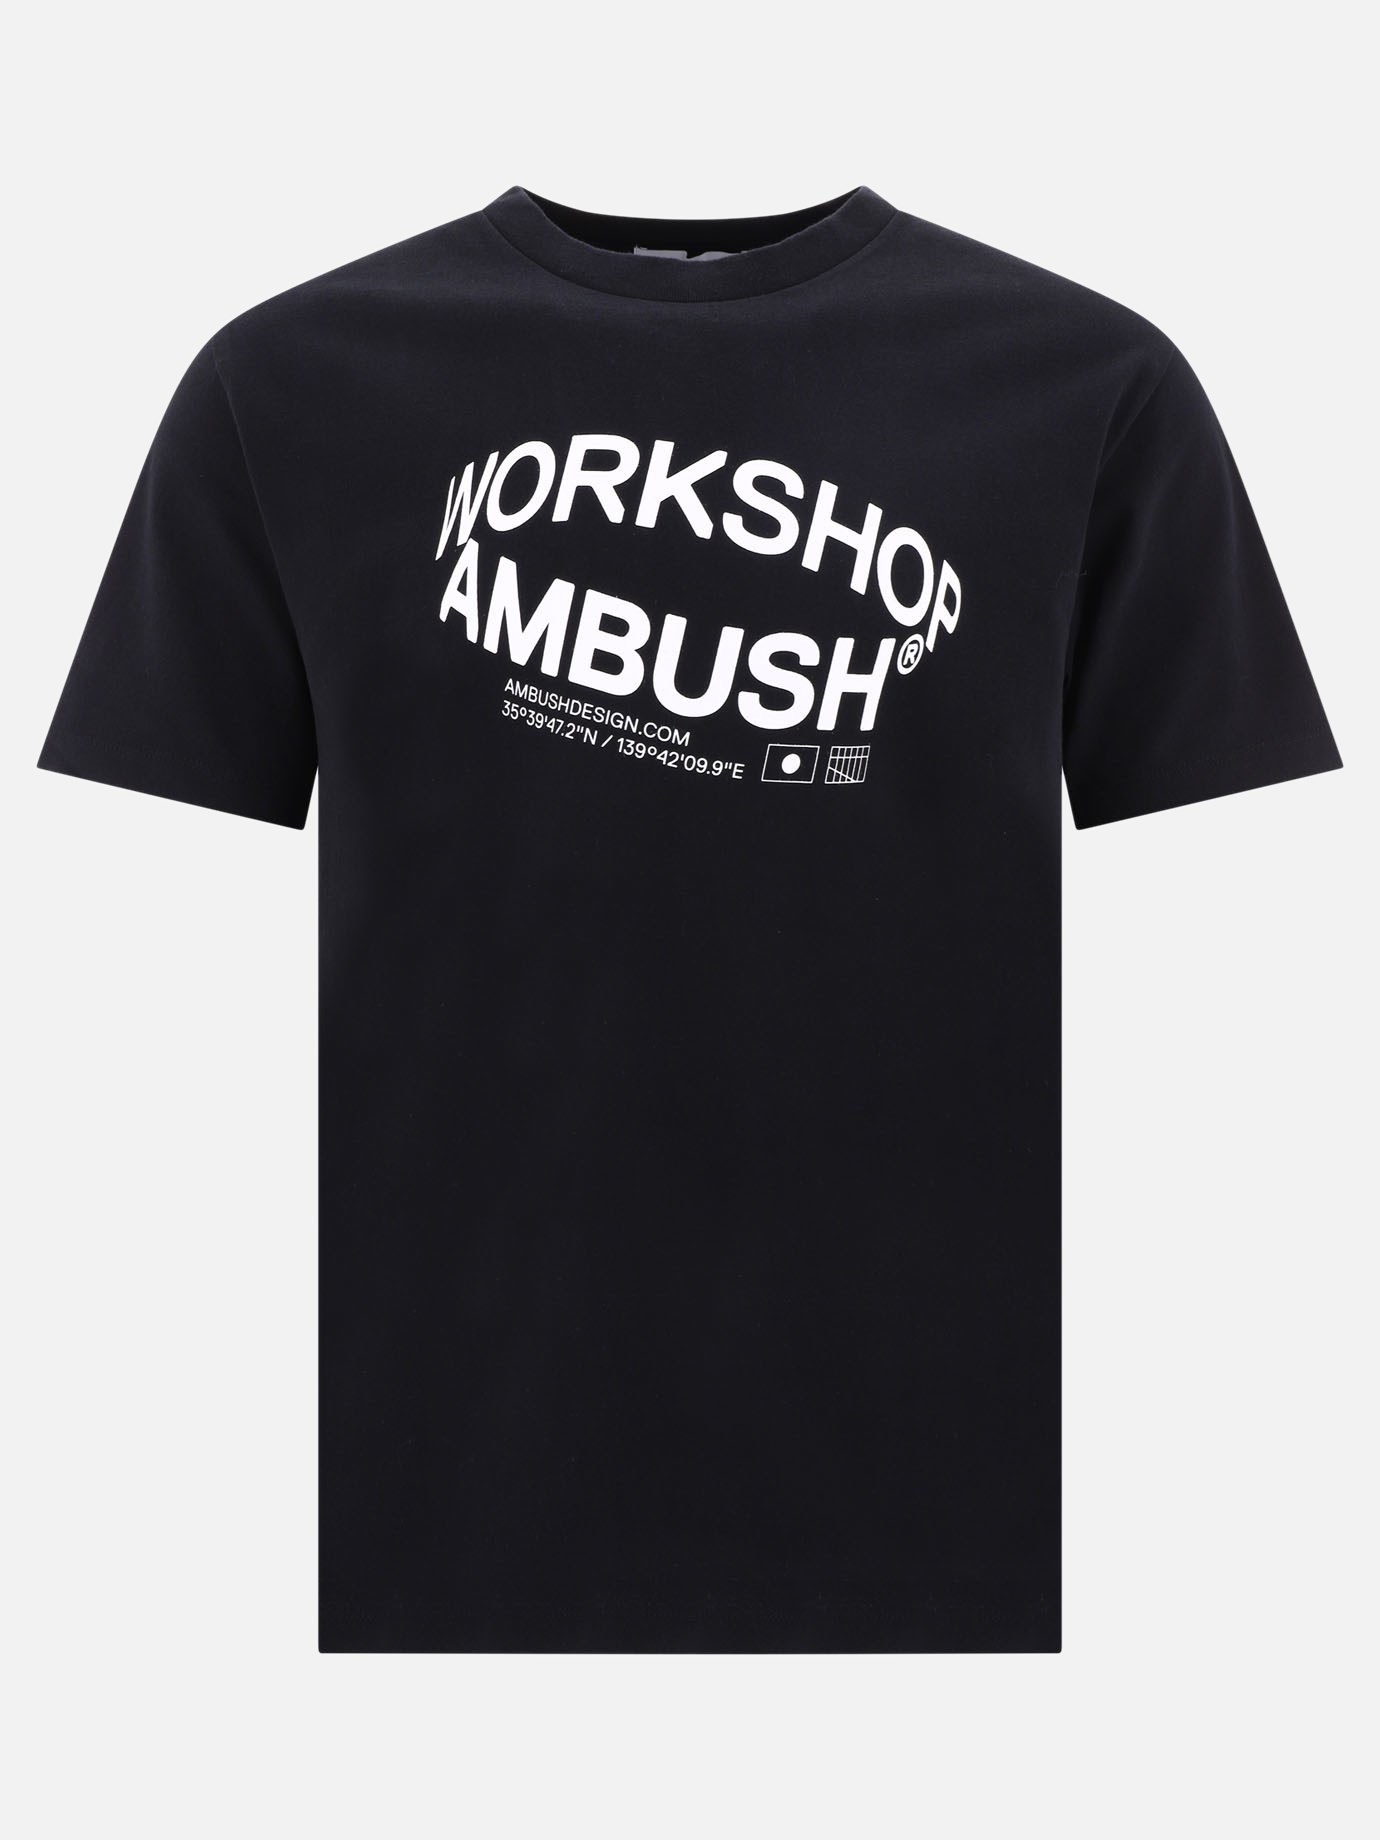  Revolve  t-shirtby Ambush - 2